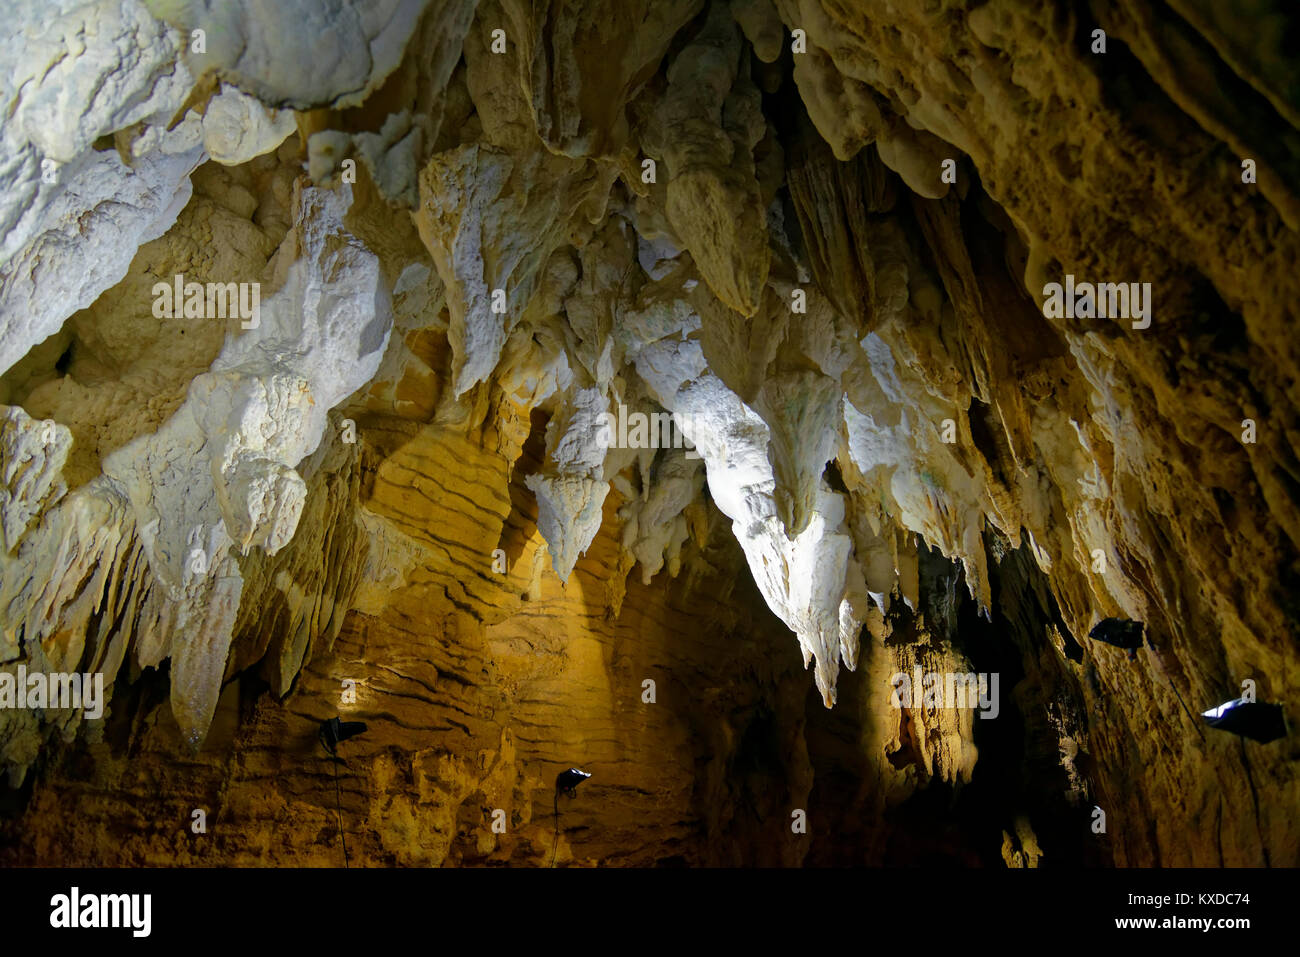 Ceiling hanging stalactites in the dripstone cave Aranui Cave,Waitomo Caves,Waikato,North Island,New Zealand Stock Photo